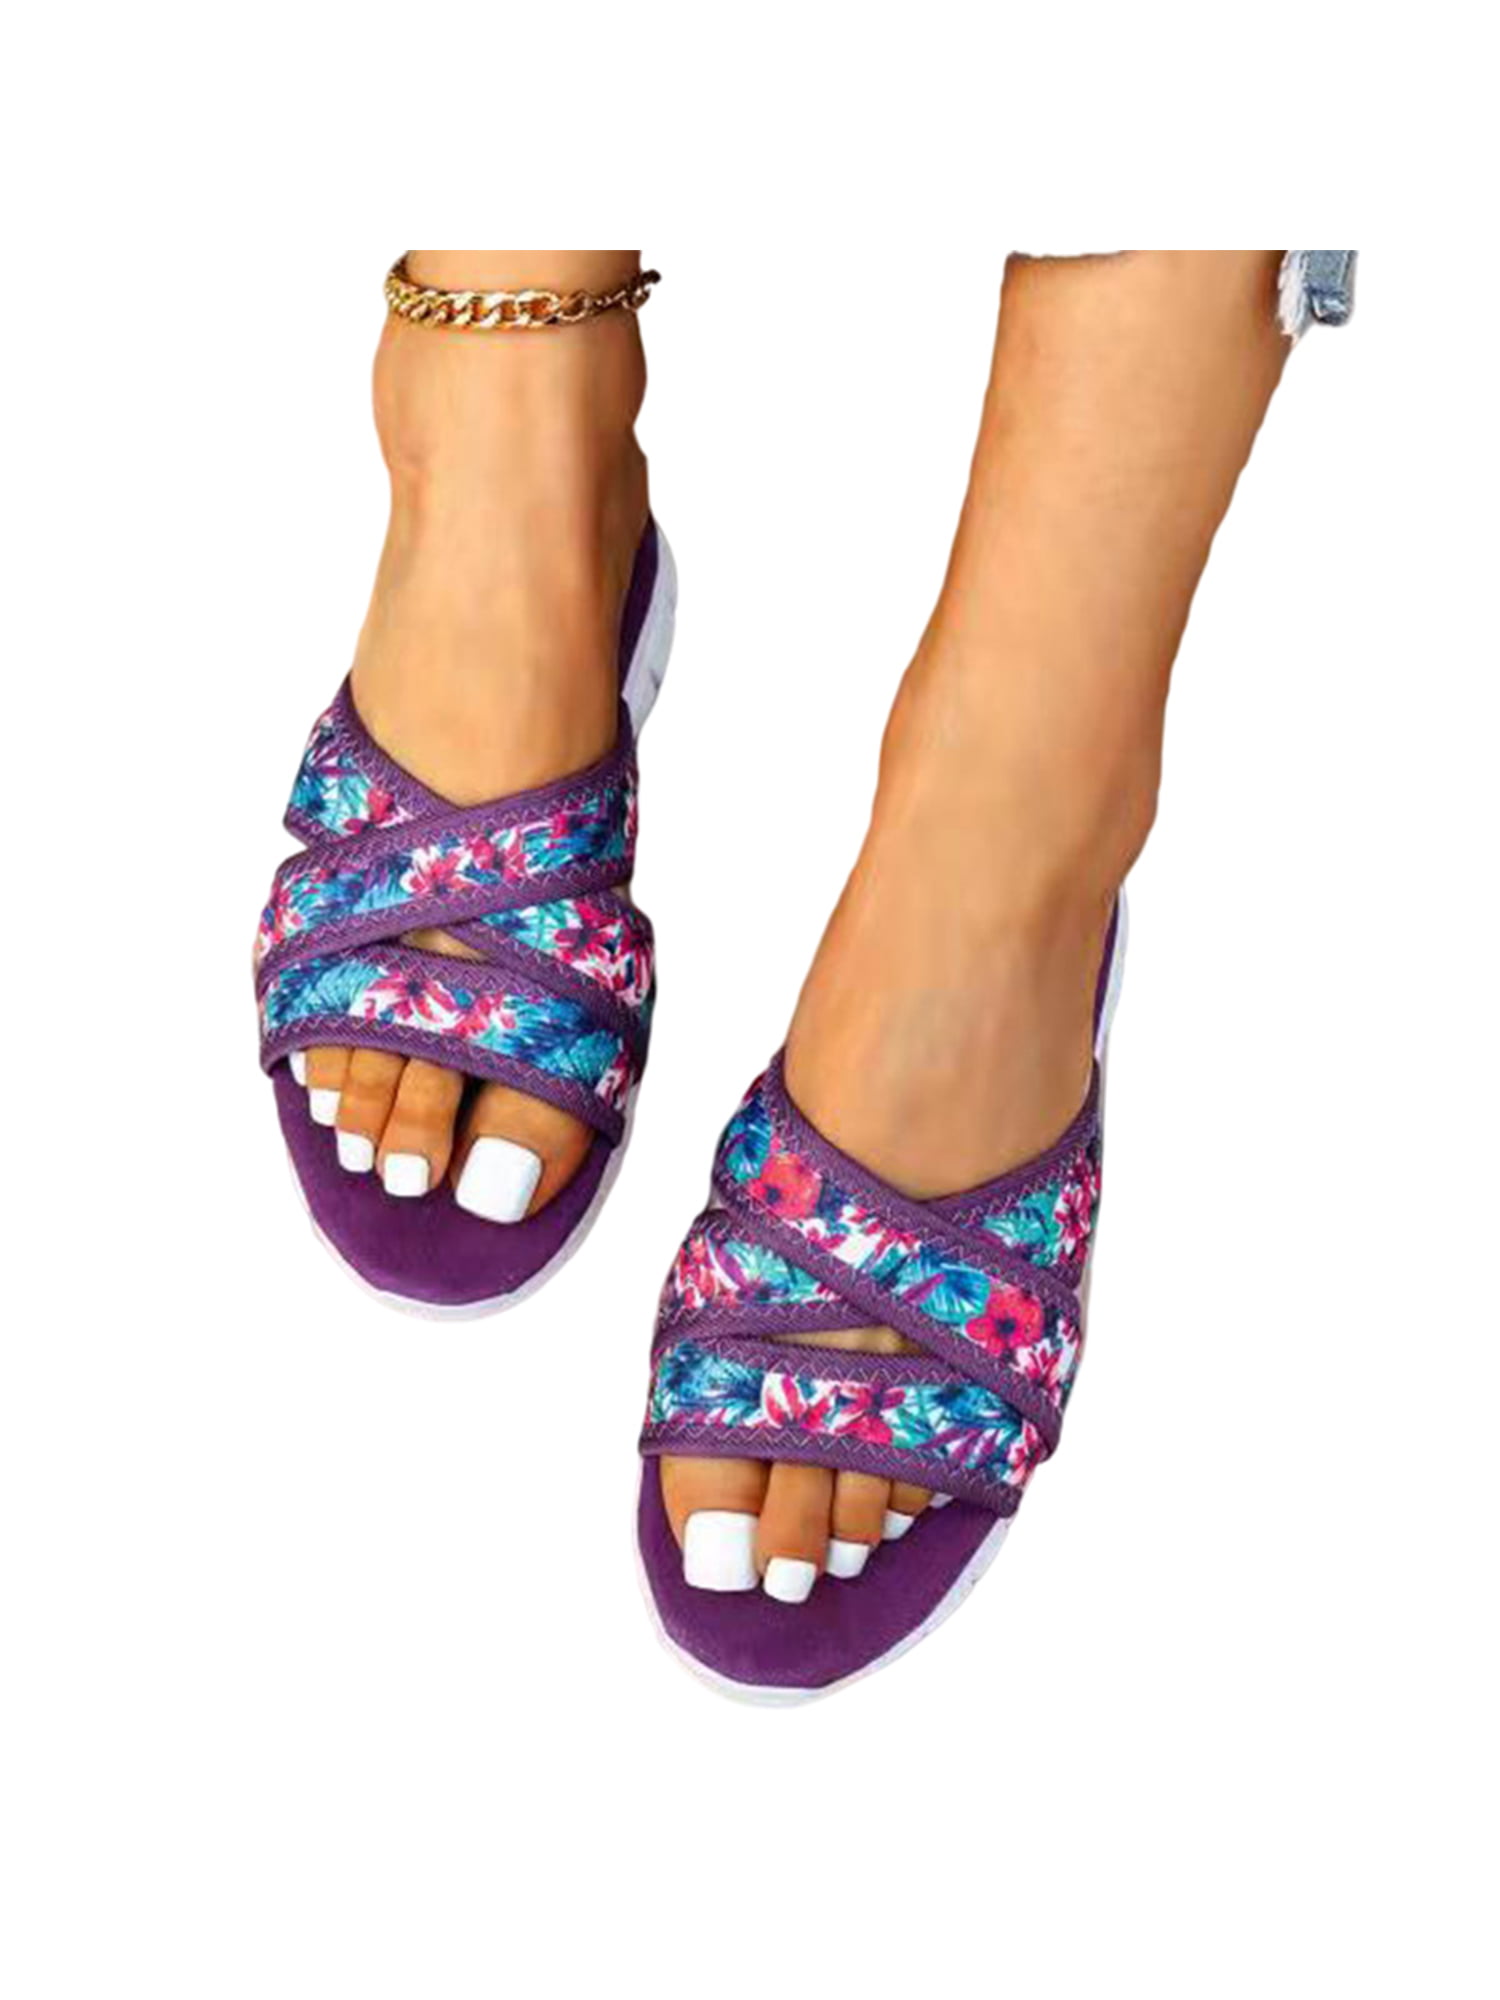 Women's Comfort Slipper Sandals Cross Strap Slip On Casual Summer Flats Shoes